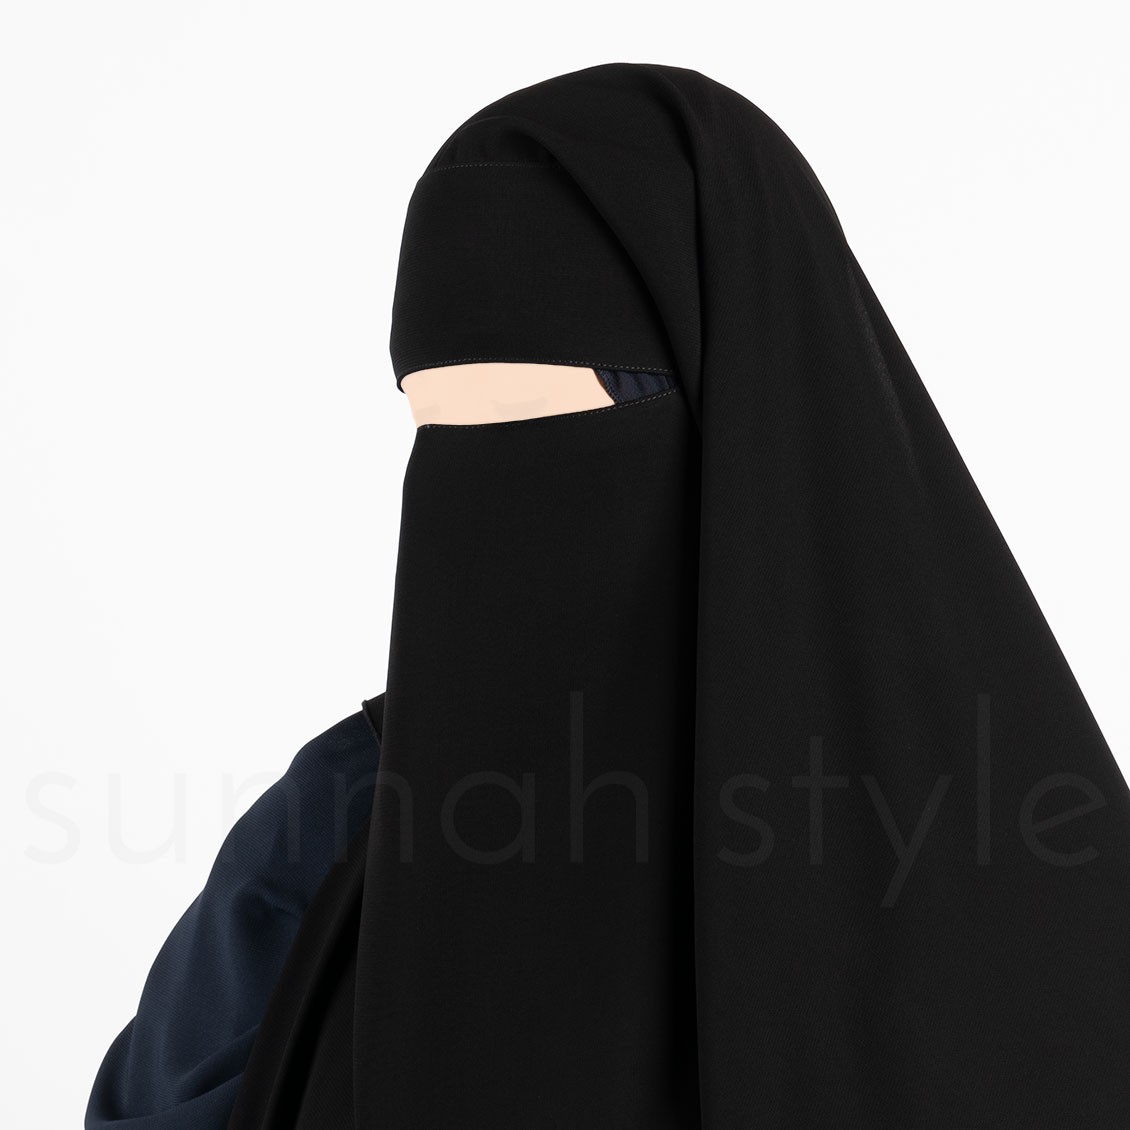 Sunnah Style Two Layer Plus Niqab Black